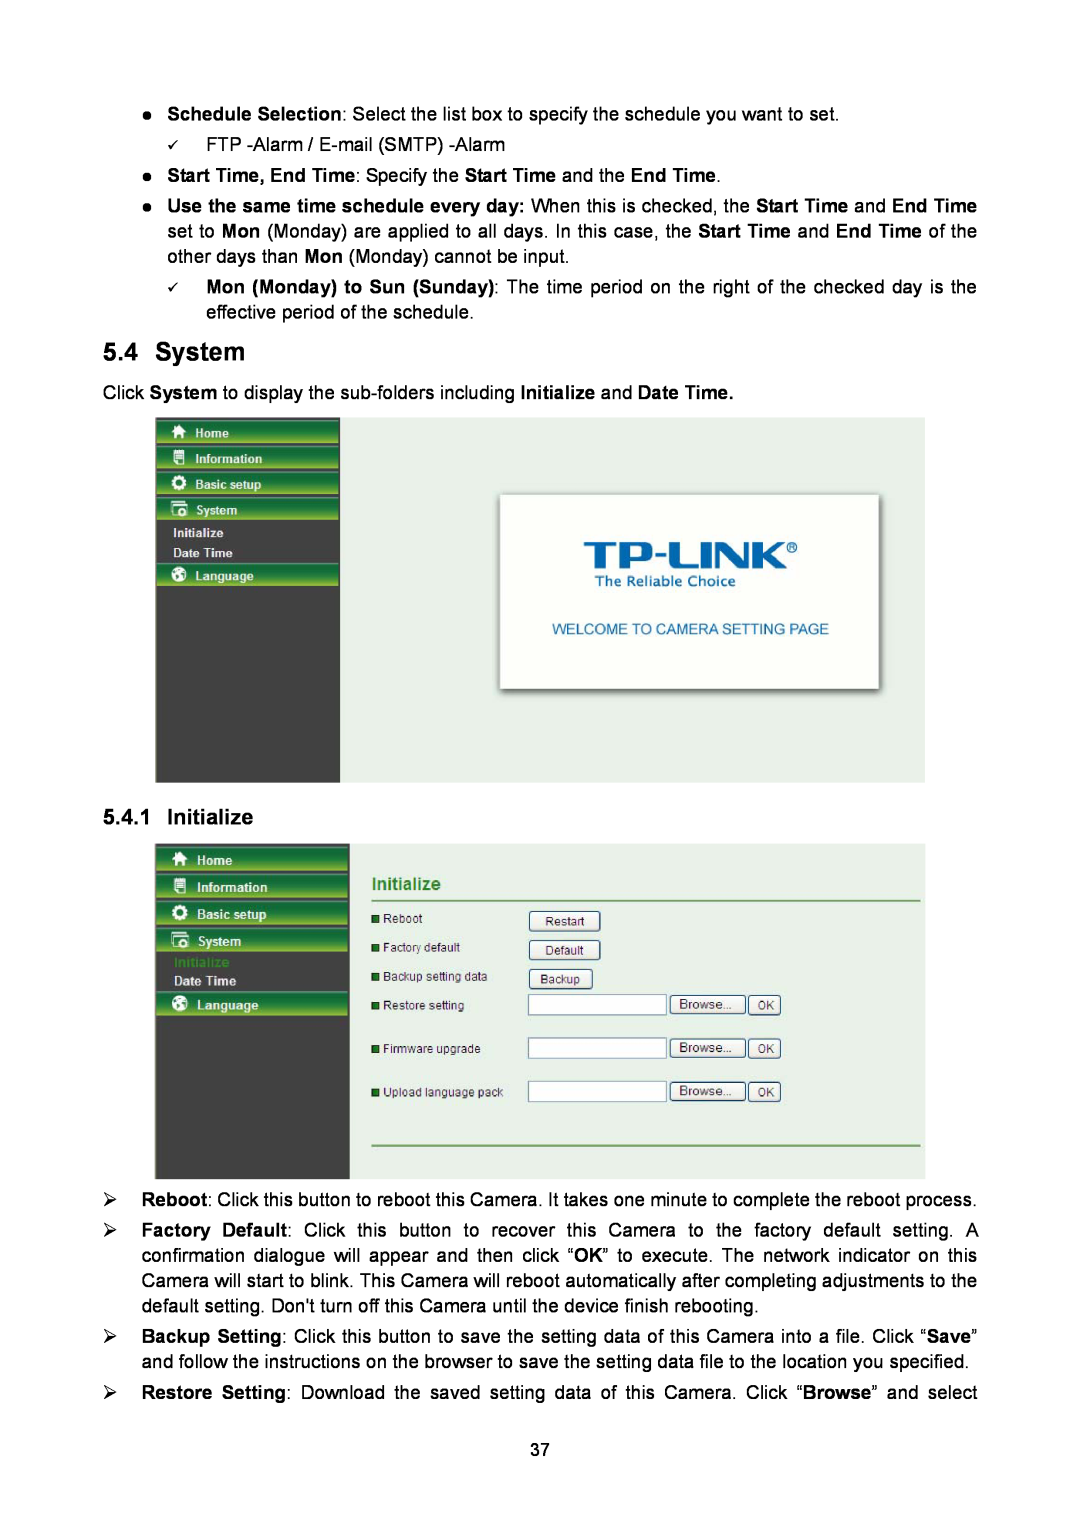 TP-Link TL-SC2020N manual 5.4System, Initialize 